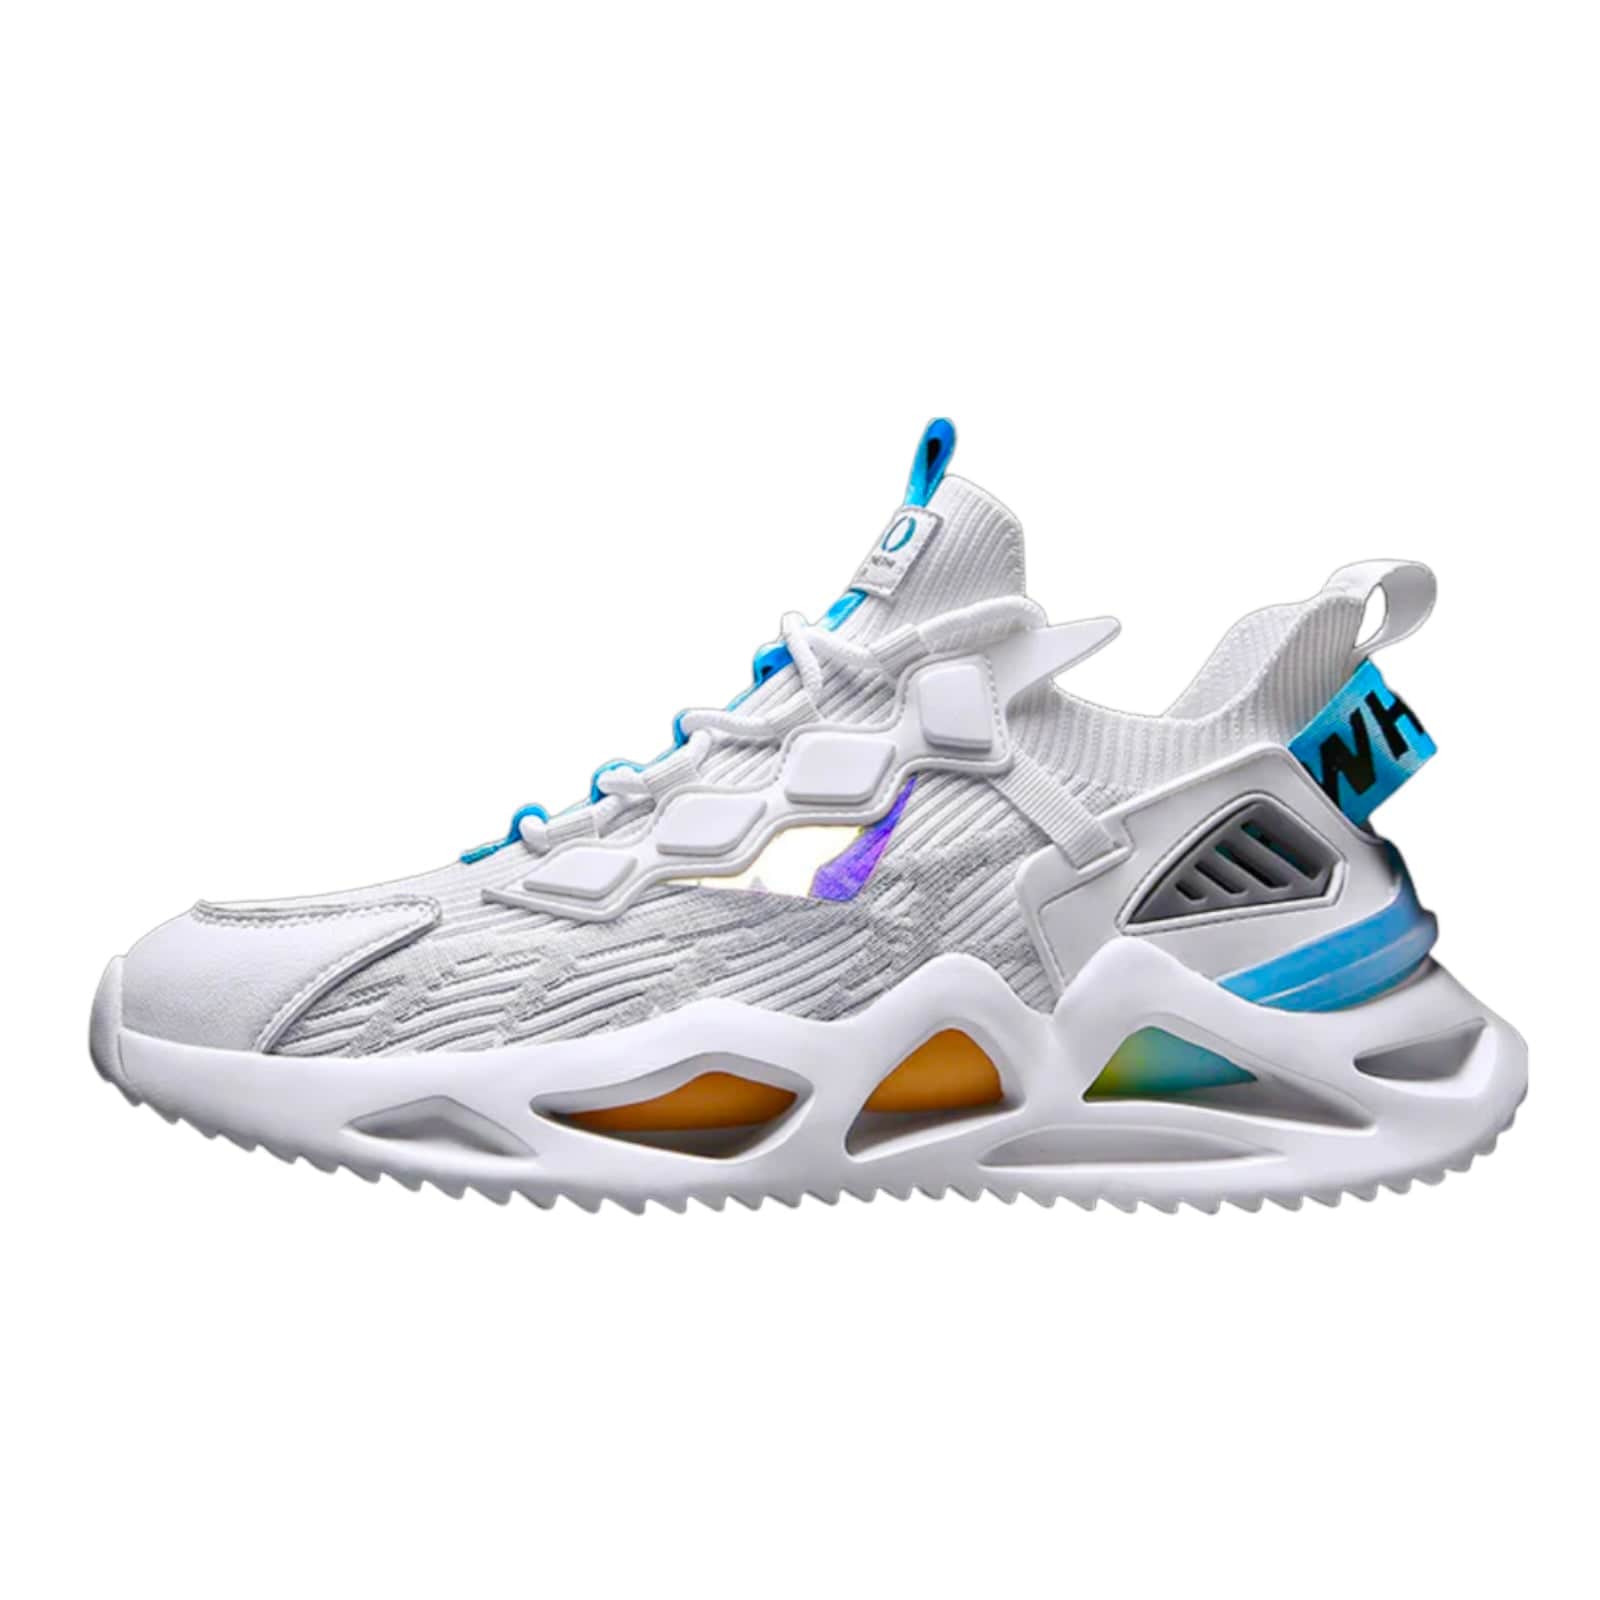 white men's sneakers moon x33 flashlander left side gym shoes